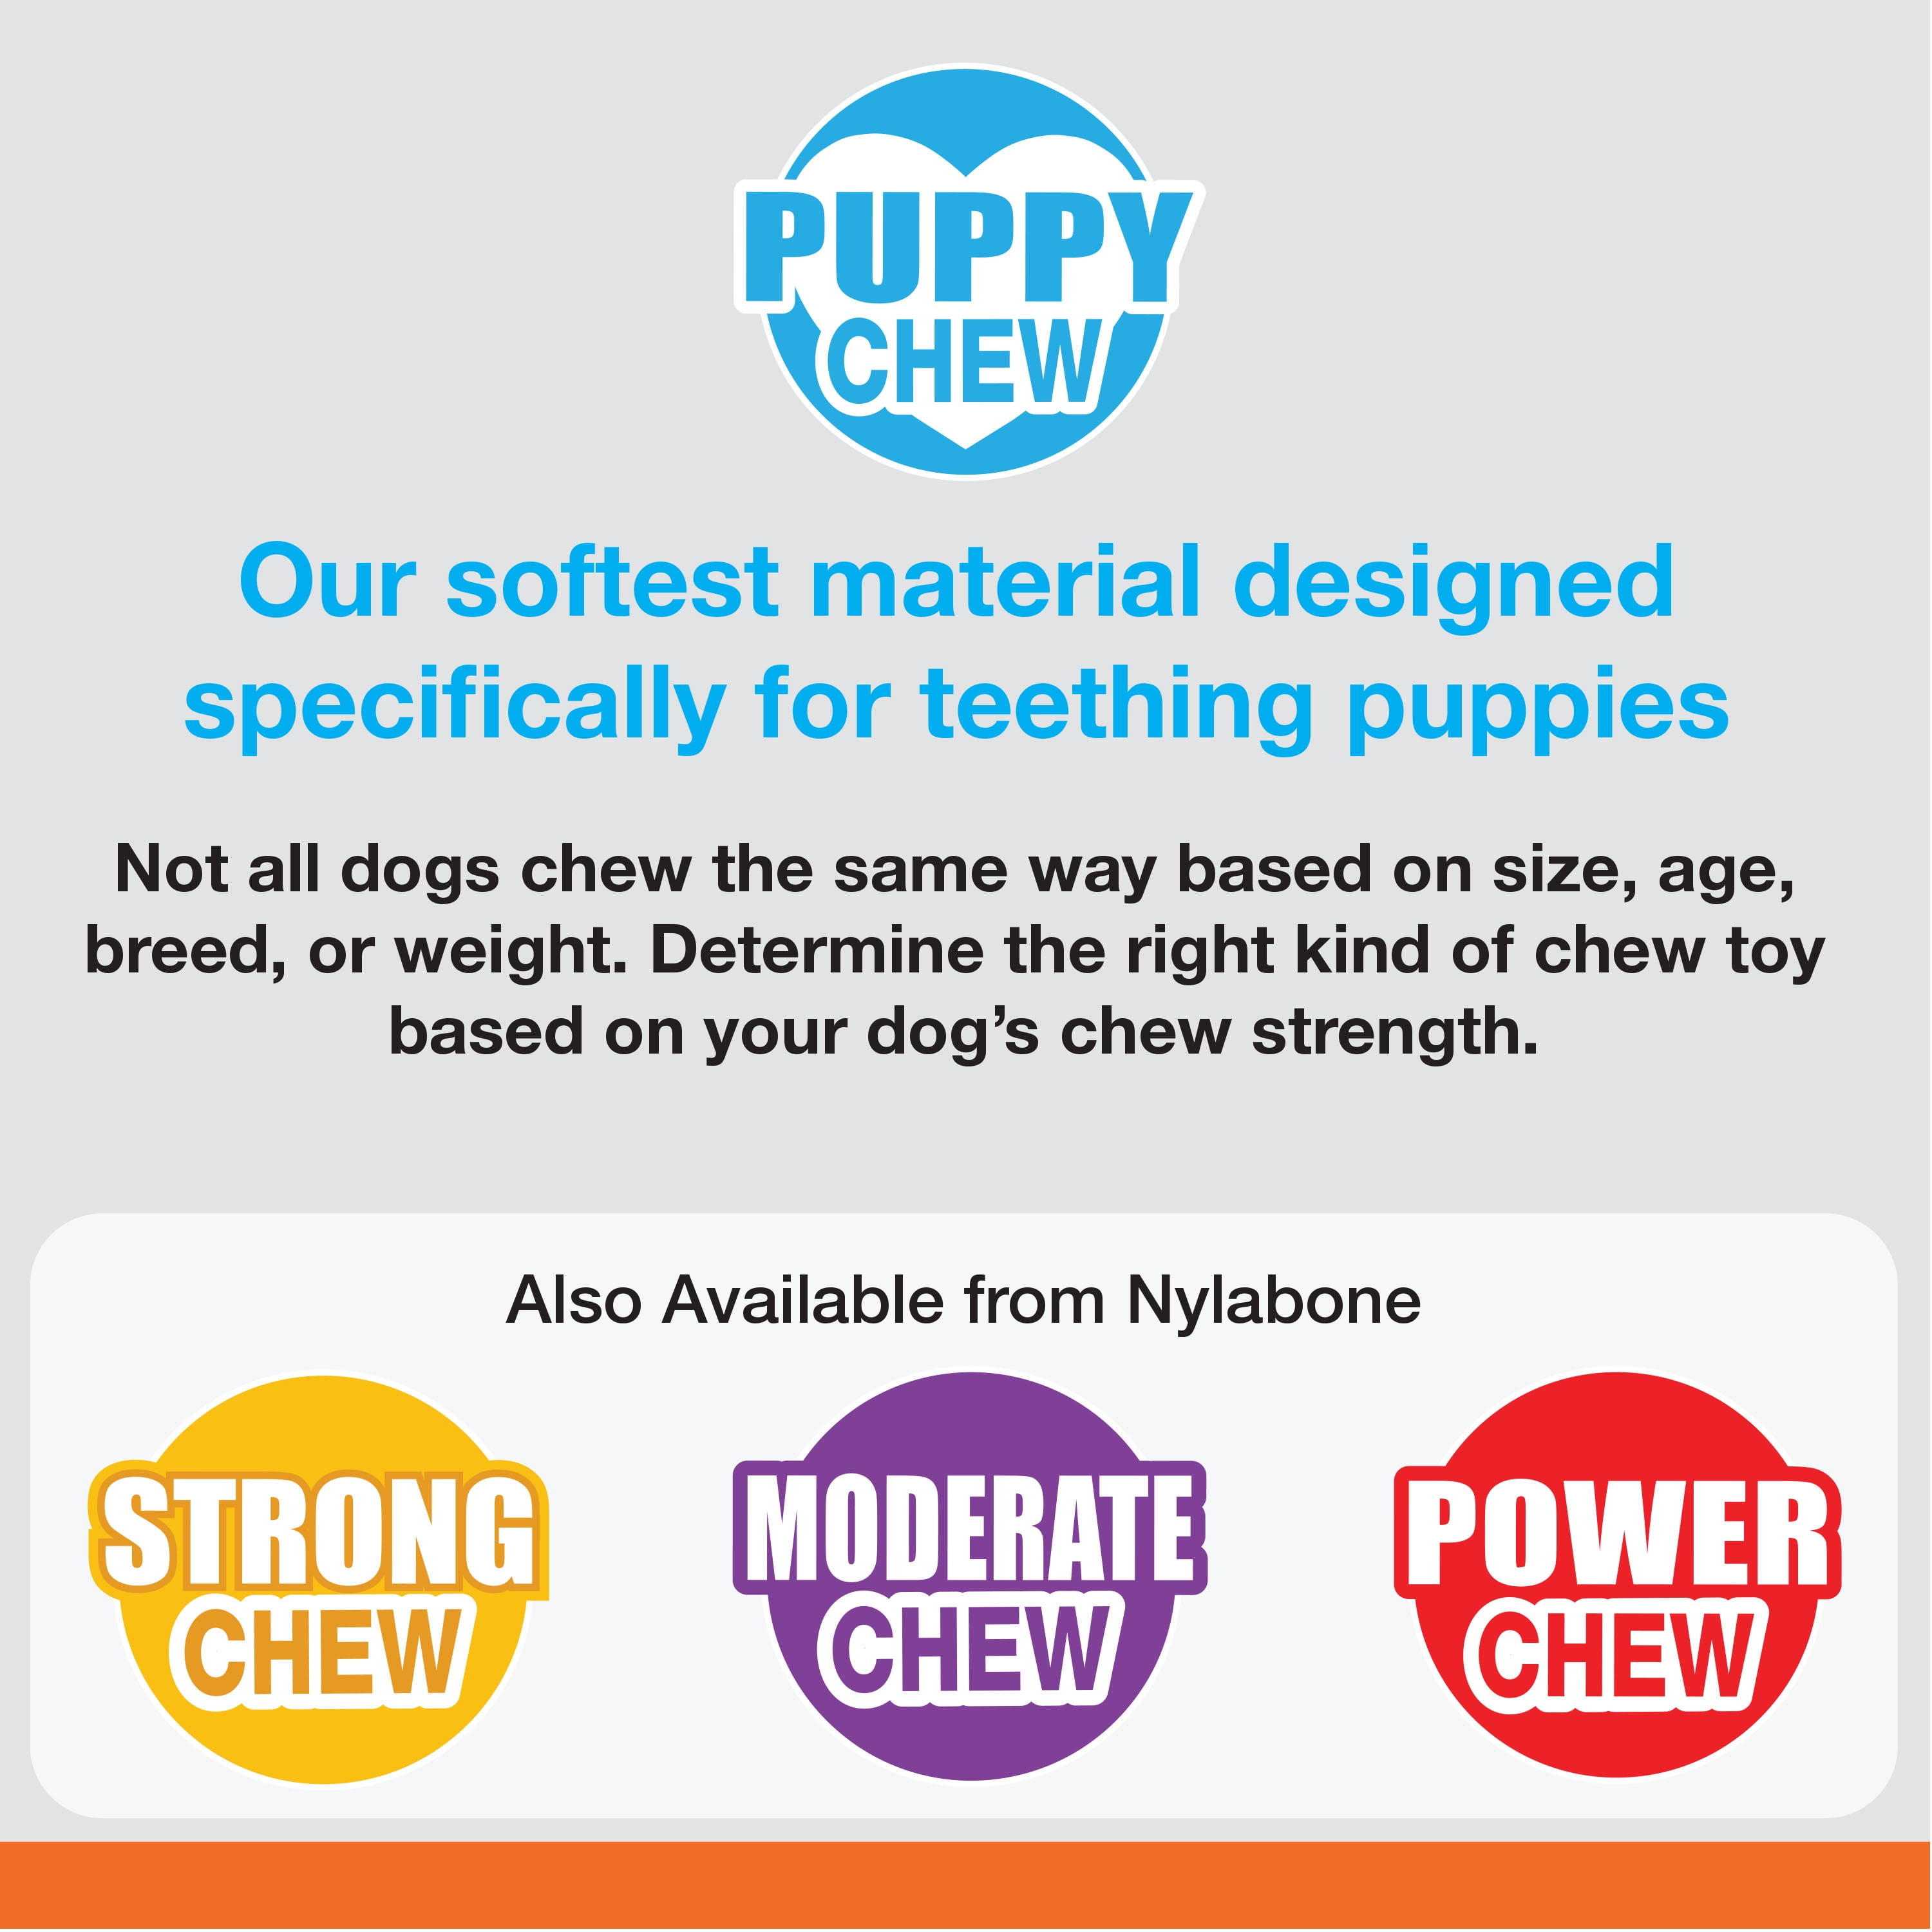 can puppies chew nylabone